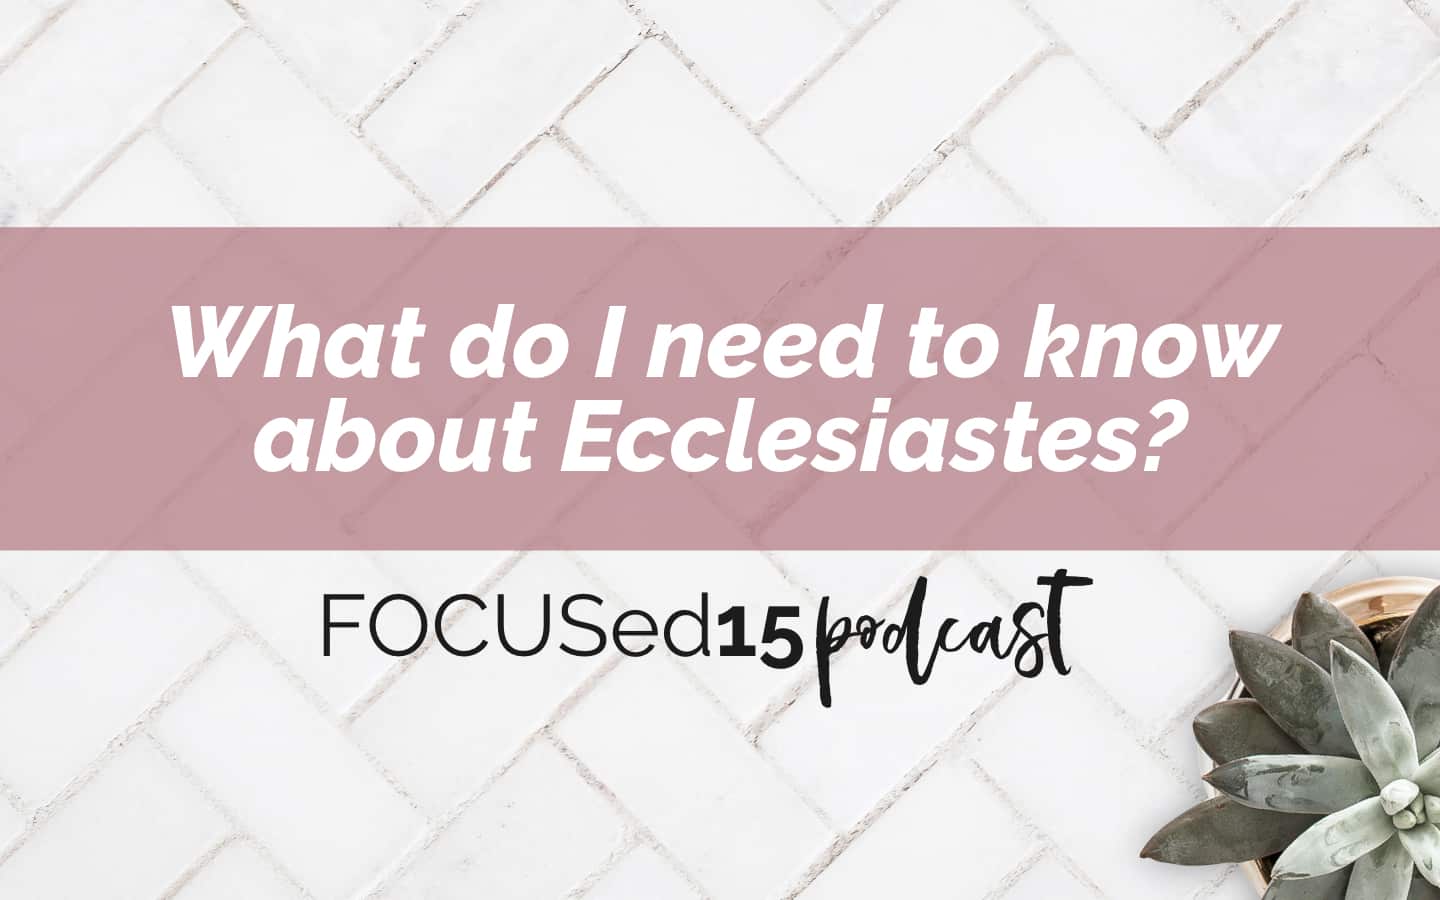 Ecclesiastes summary